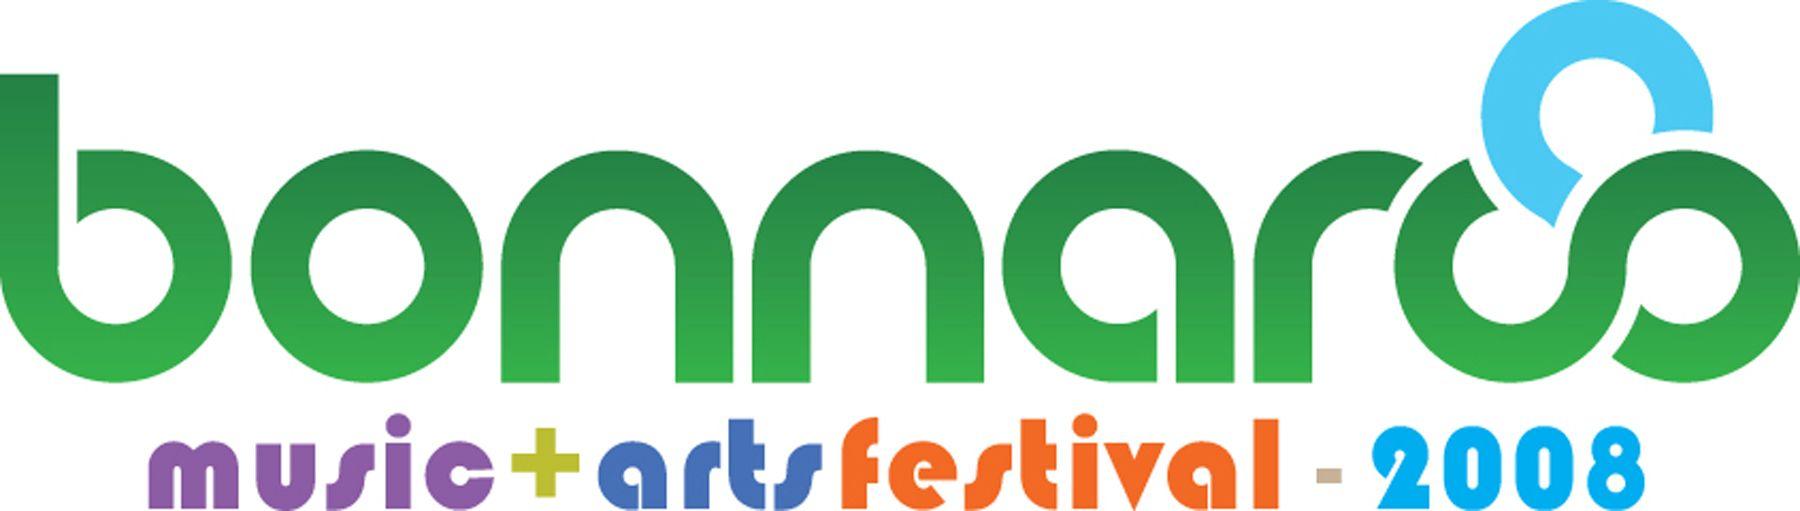 Bonnaroo Logo - Bonnaroo Music & Arts Festival logo 2008 | Fun Bonnaroo Stuff ...